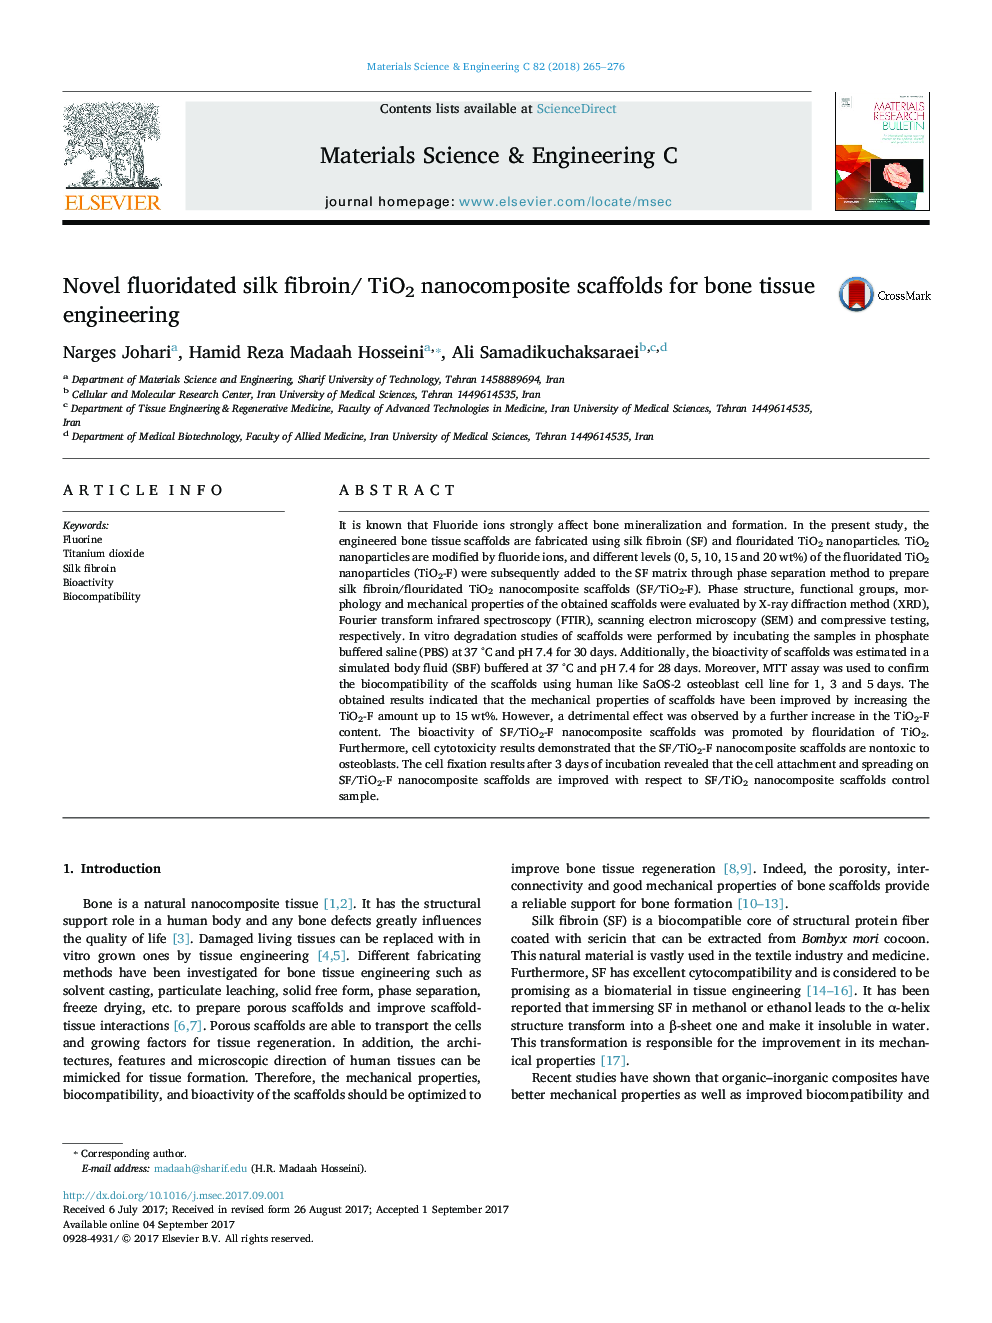 Novel fluoridated silk fibroin/ TiO2 nanocomposite scaffolds for bone tissue engineering